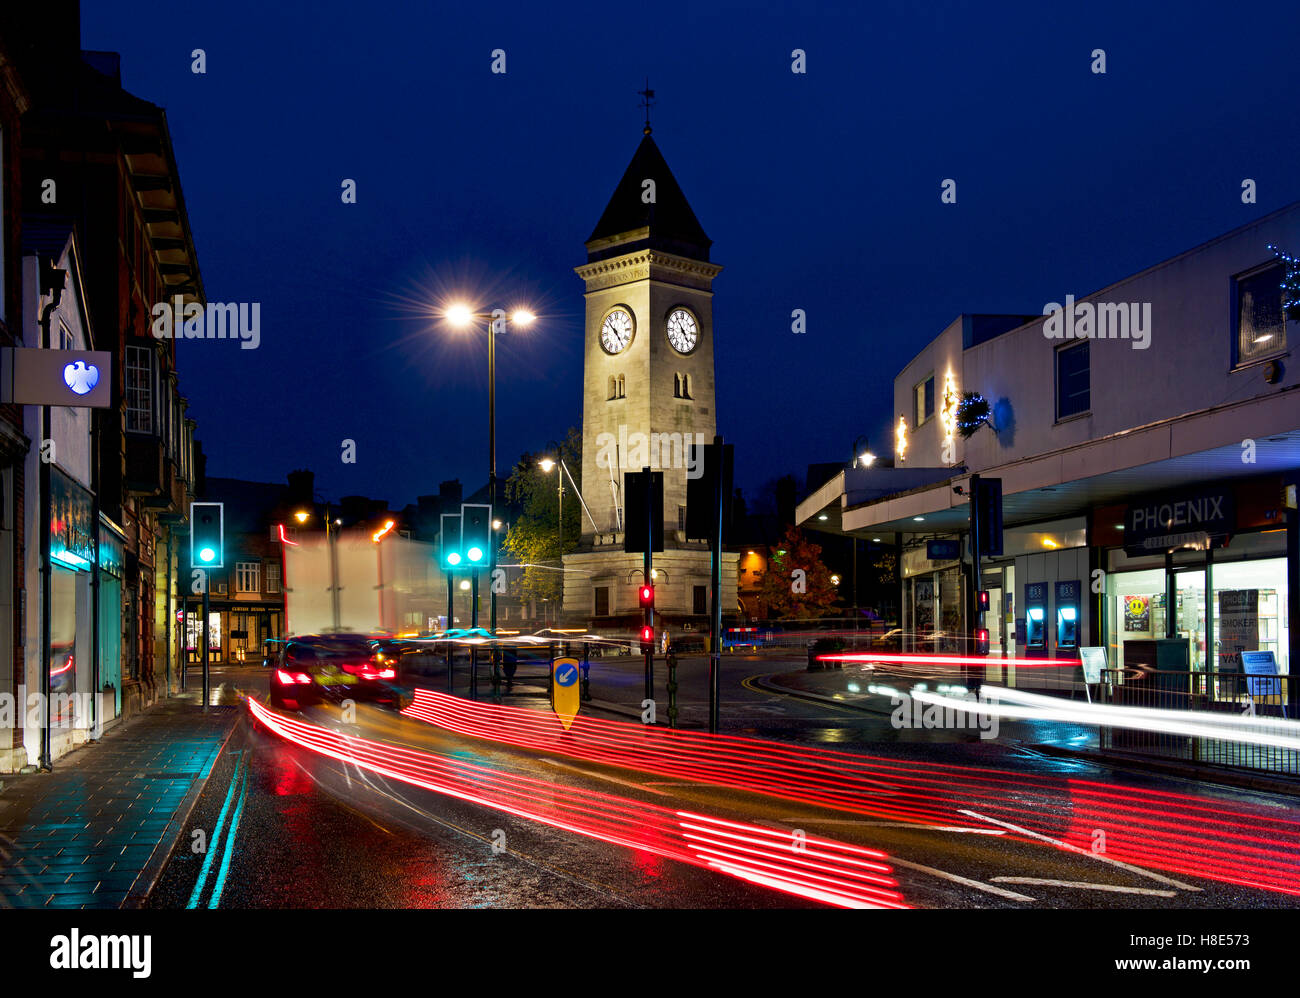 Town centre at night, Leek, Staffordshire, England UK Stock Photo